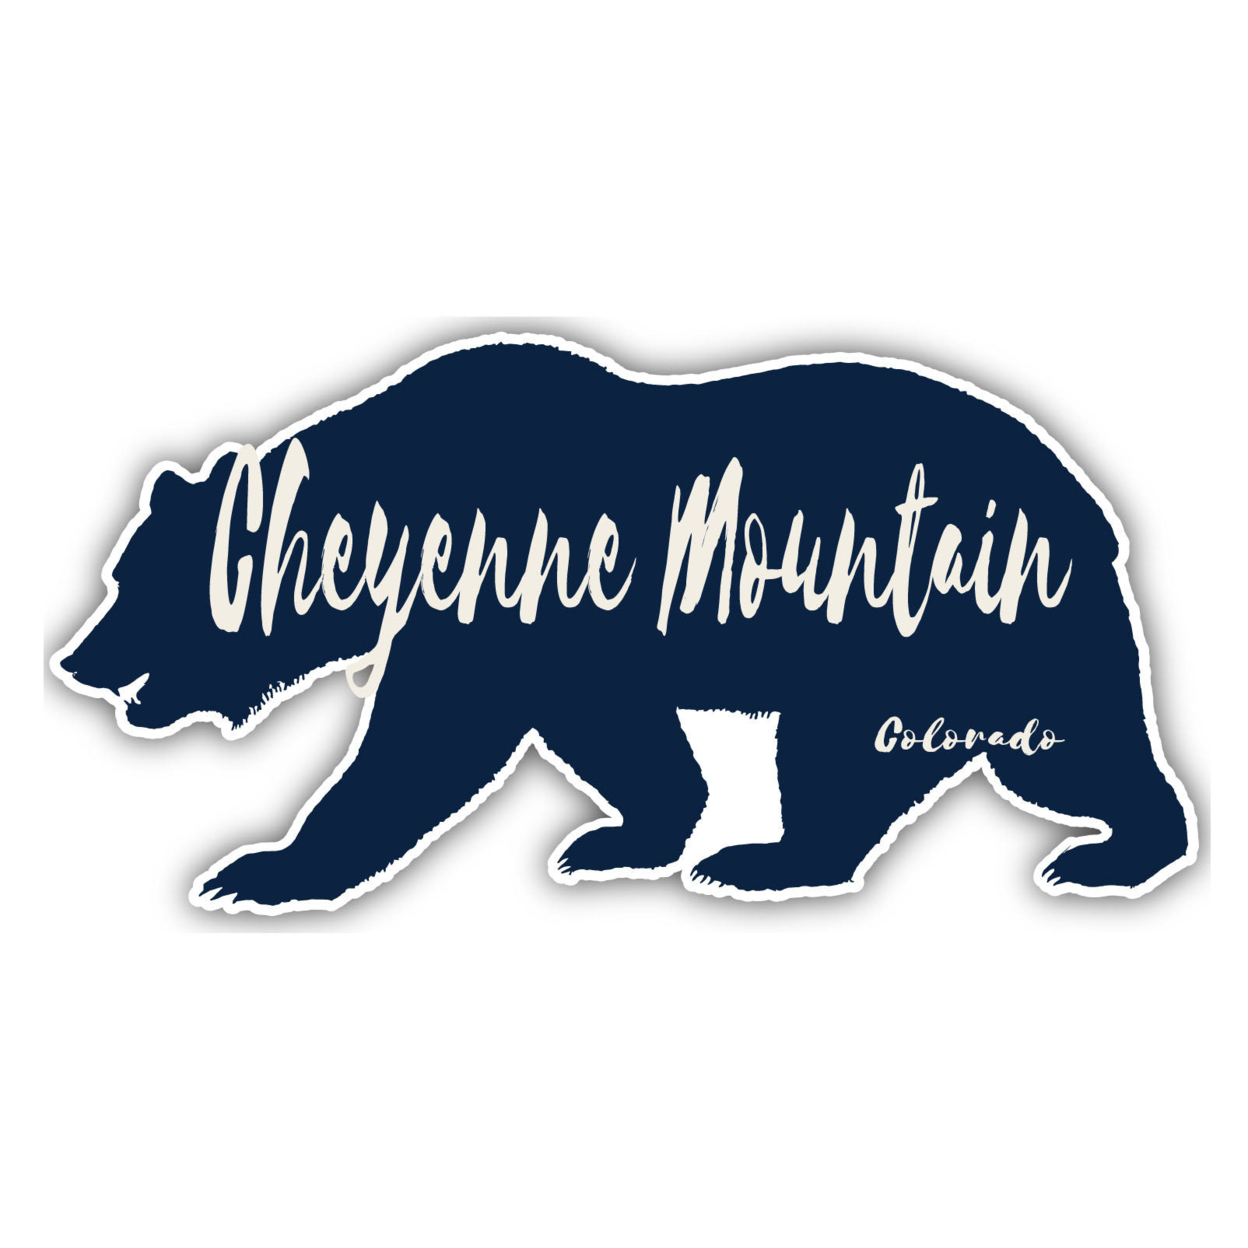 Cheyenne Mountain Colorado Souvenir Decorative Stickers (Choose Theme And Size) - Single Unit, 8-Inch, Camp Life